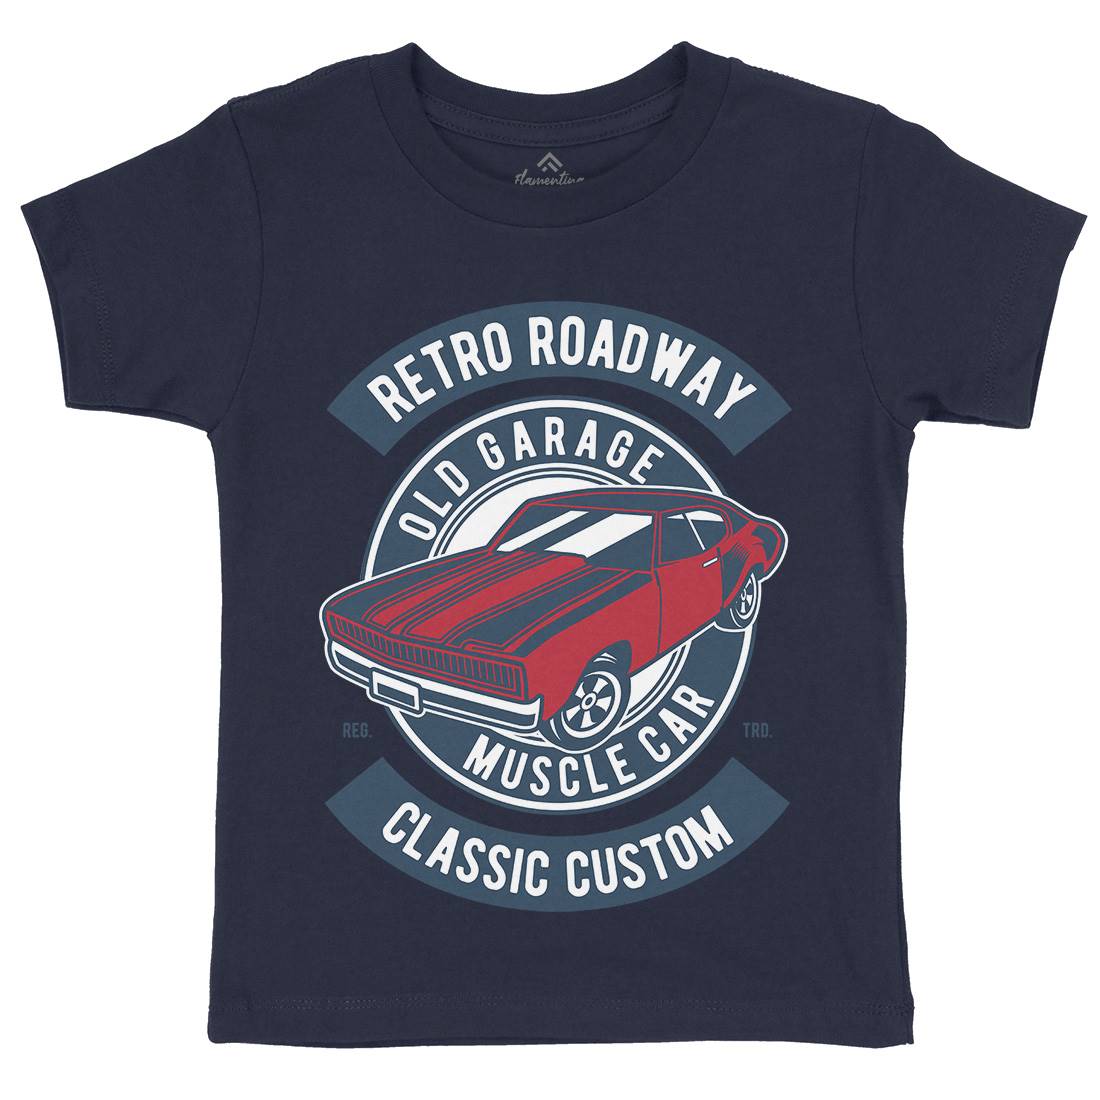 Retro Roadway Kids Crew Neck T-Shirt Cars D568